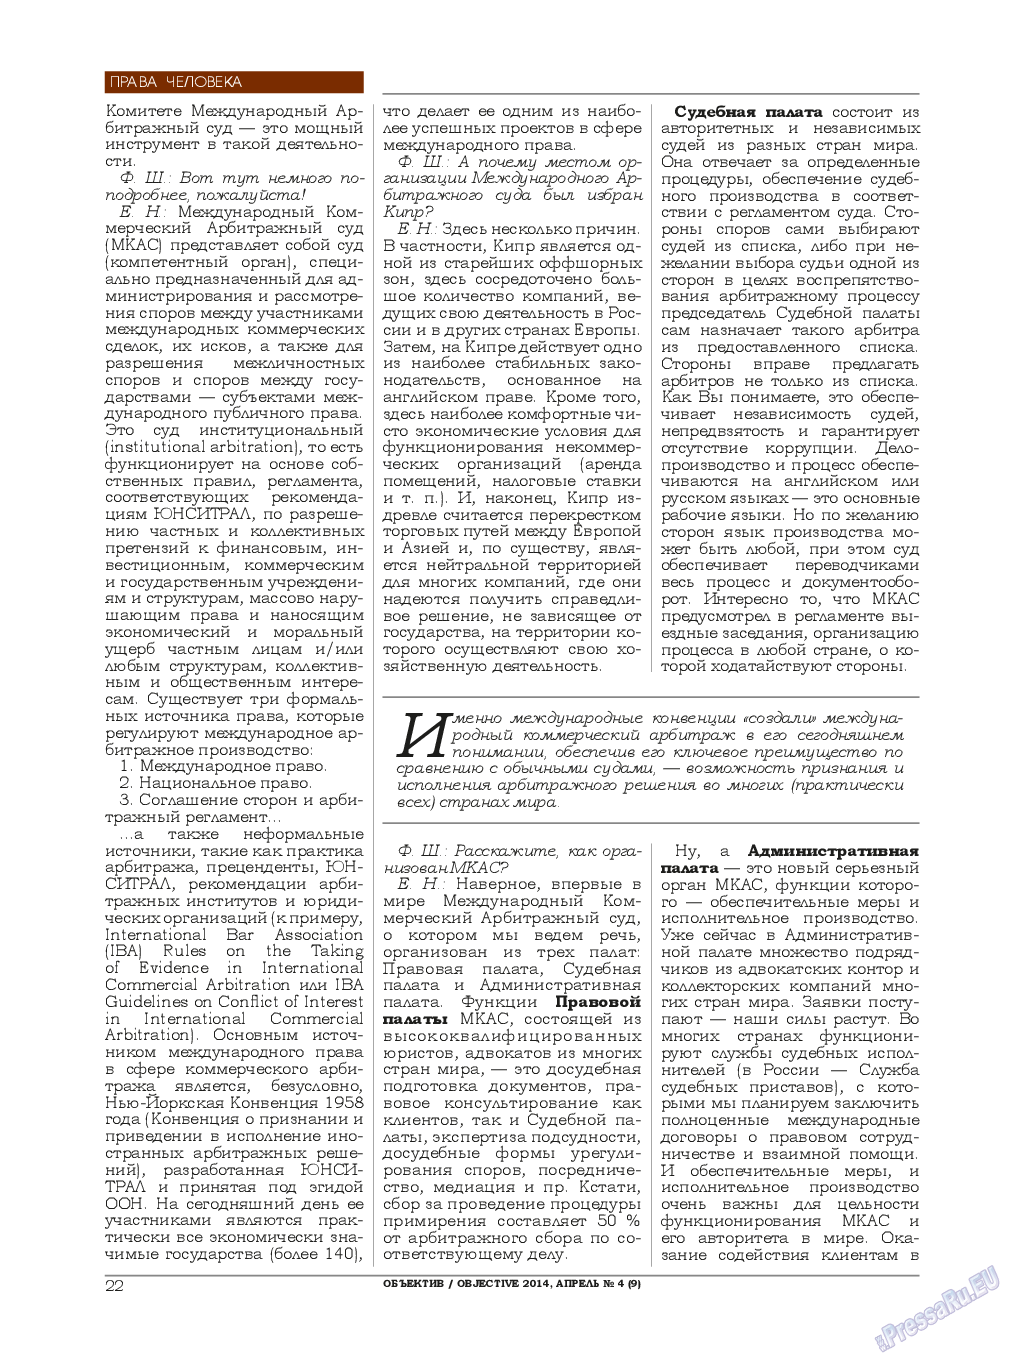 Объектив EU, журнал. 2014 №4 стр.22